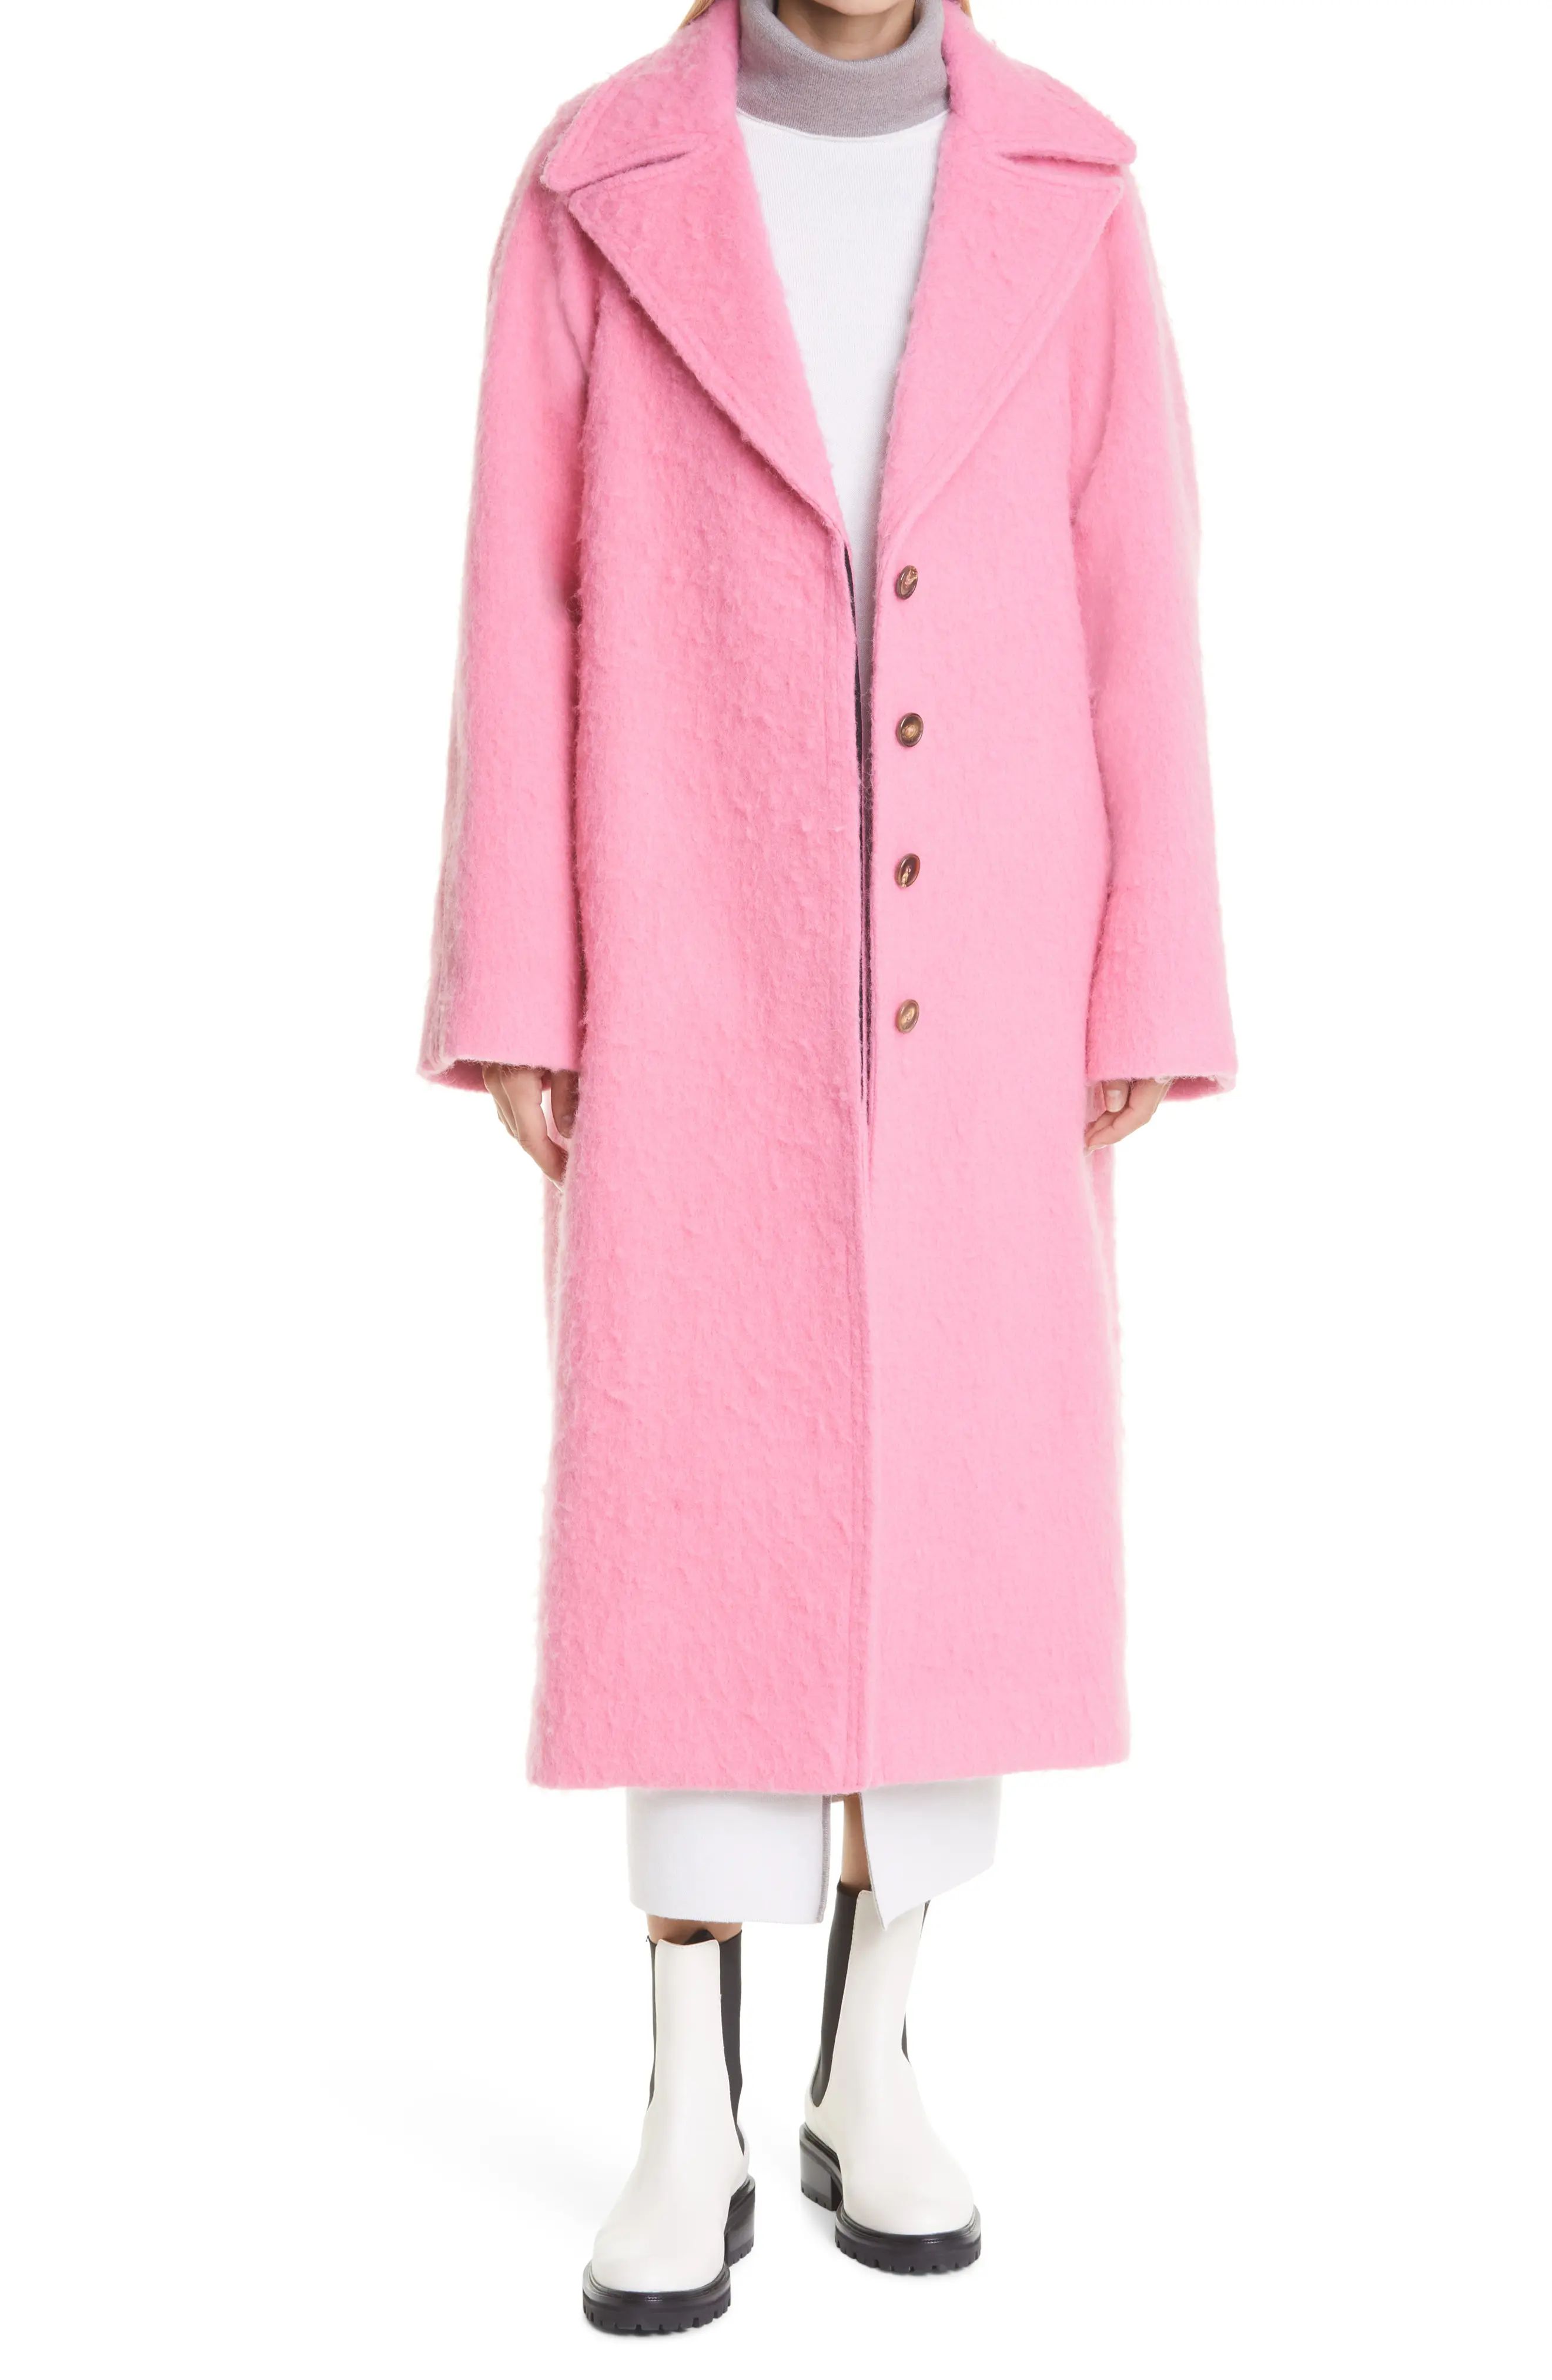 Victoria Beckham Brushed Wool Blend Coat, Size 0 Us in Candy Pink at Nordstrom | Nordstrom